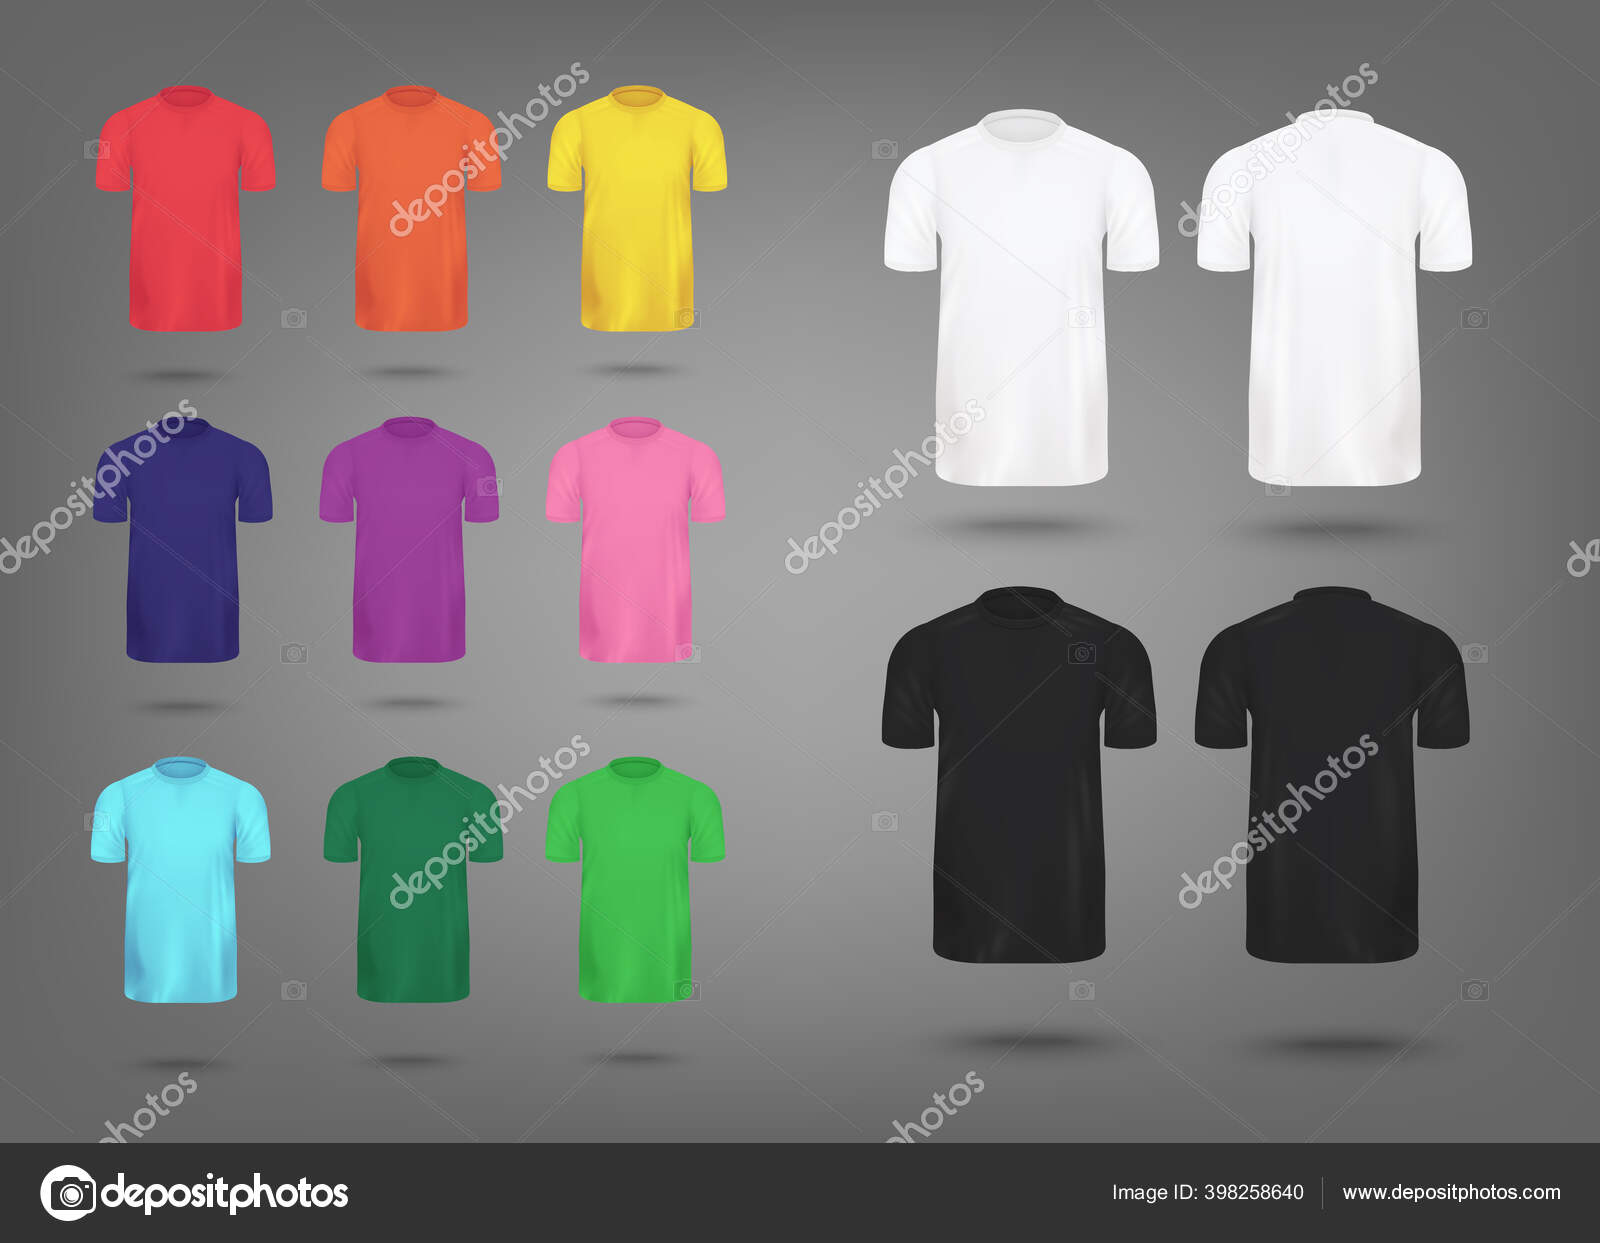 Download Colorful Realistic T Shirt Mockup Set Mens Fashion Apparel Template Stok Vektor C Sabelskaya 398258640 PSD Mockup Templates